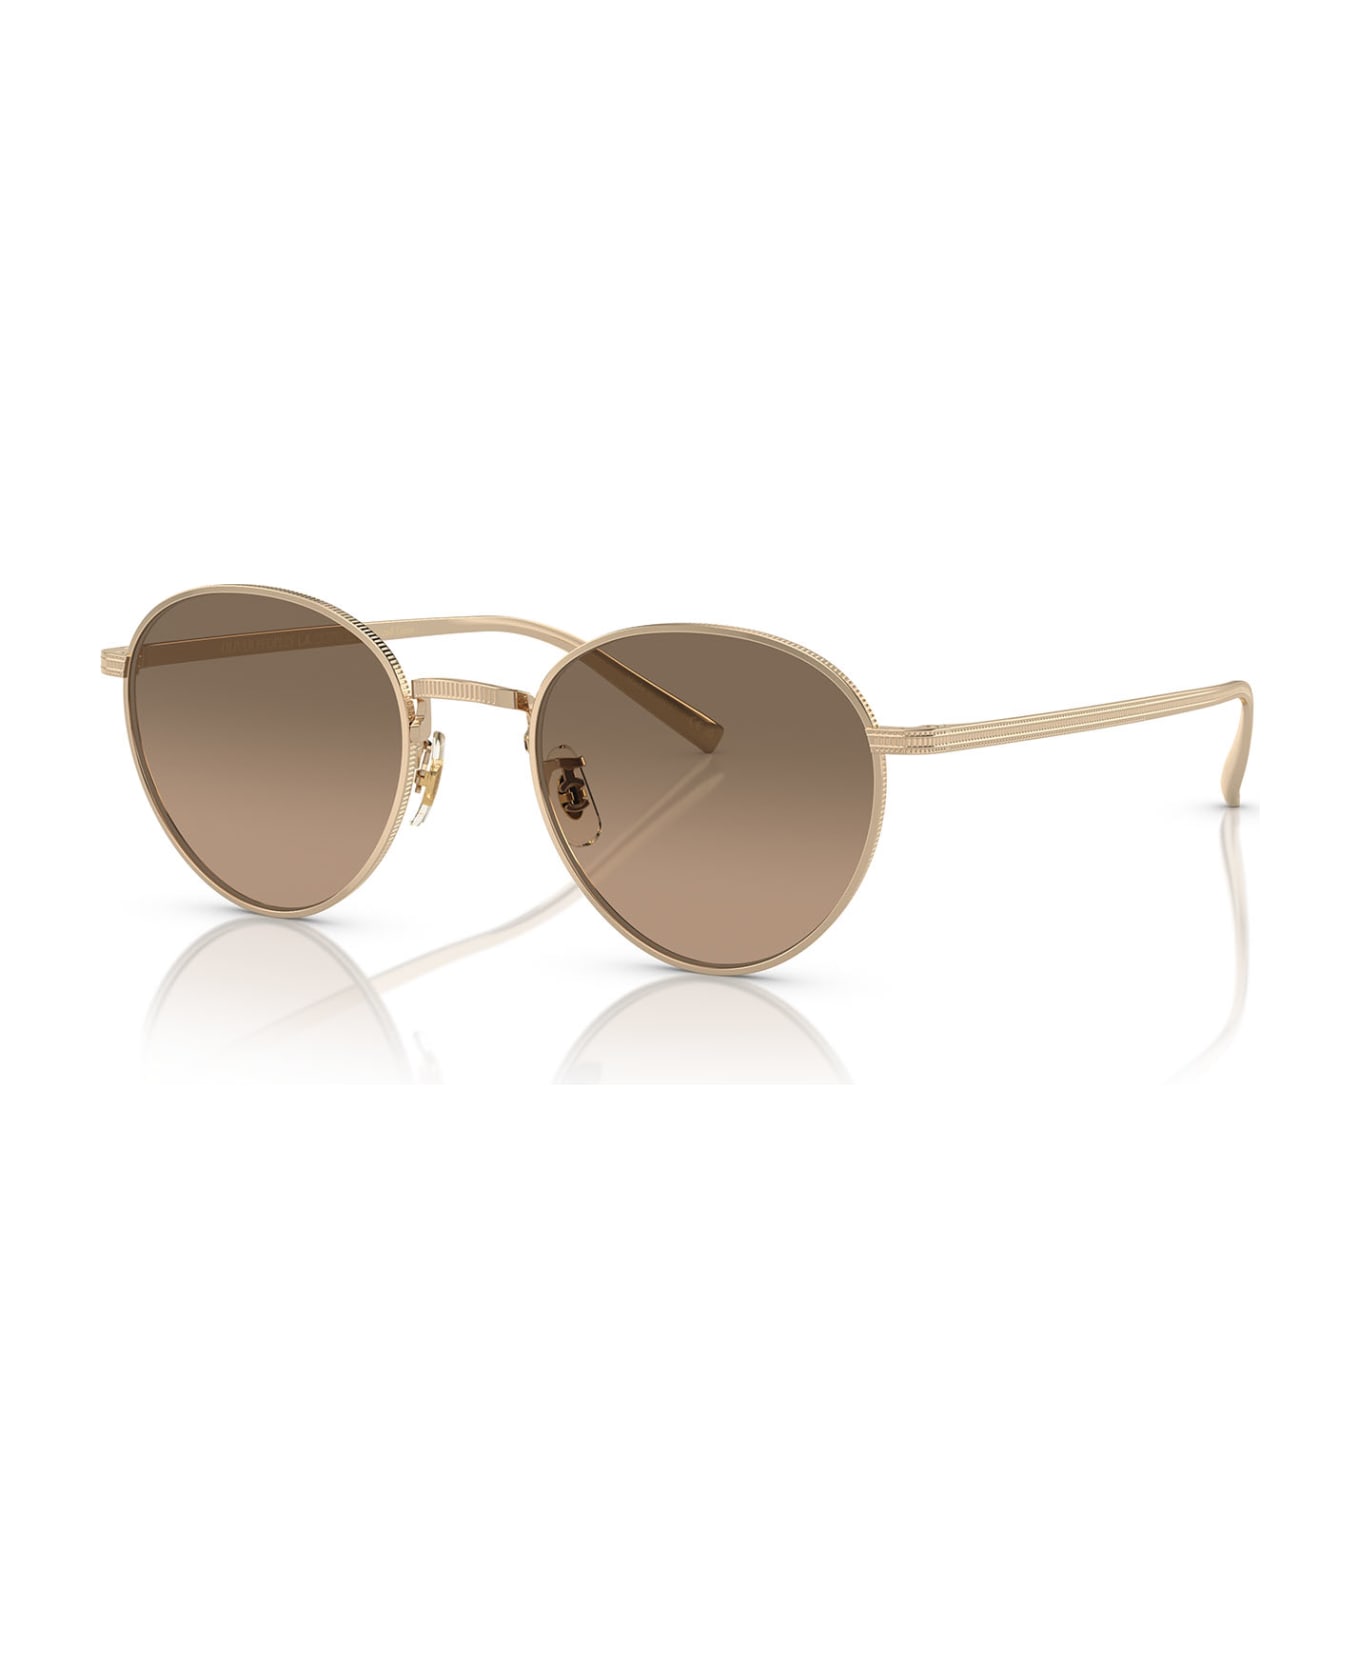 Oliver Peoples Ov1336st Gold Sunglasses - Gold